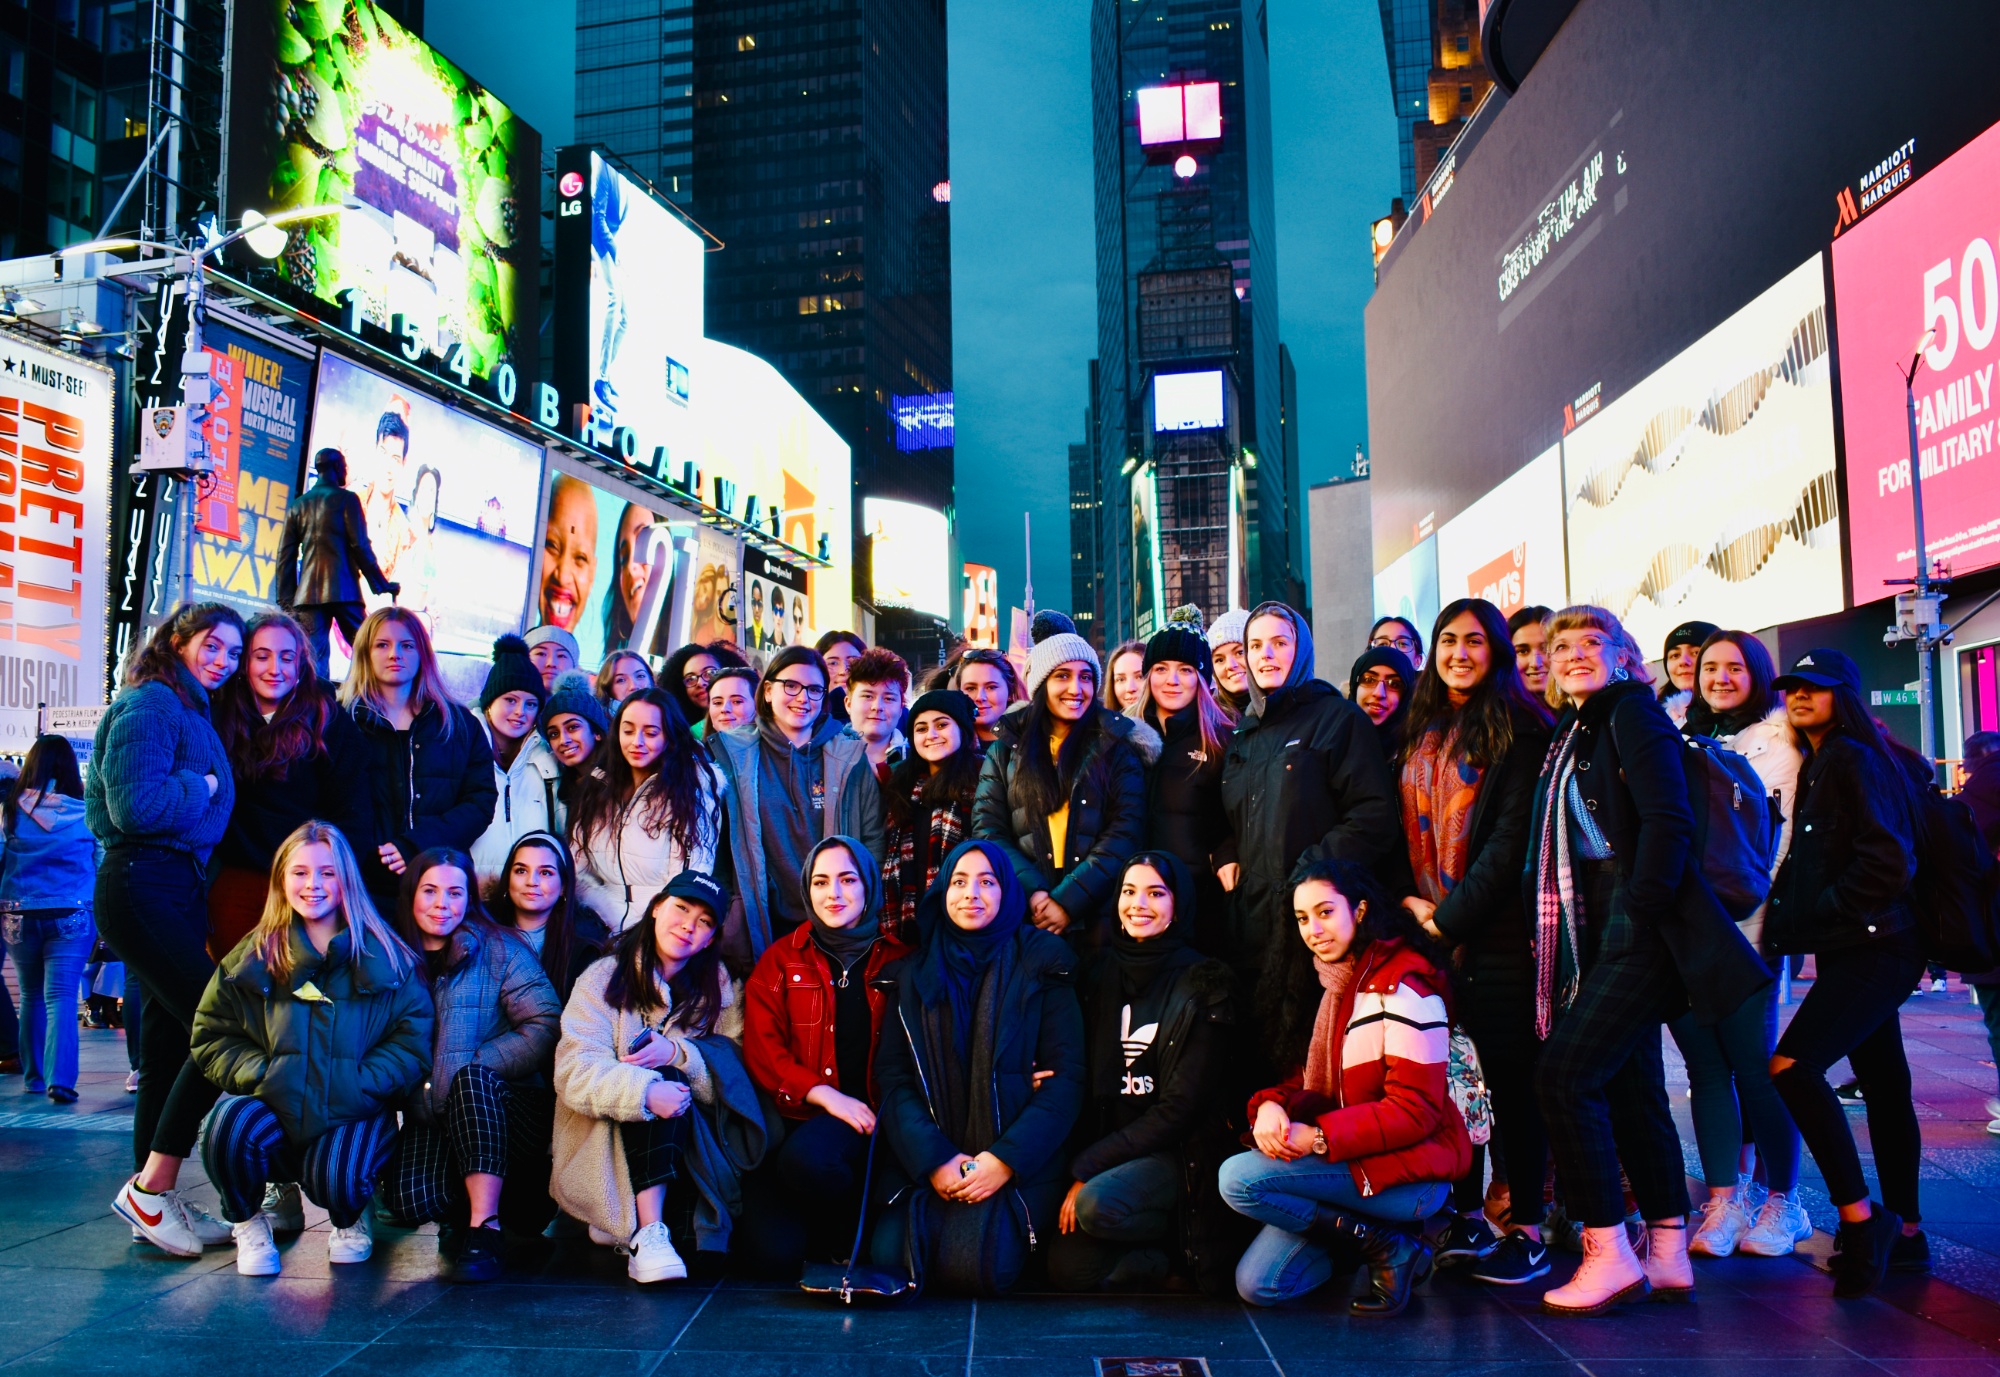 USA trip Times Square